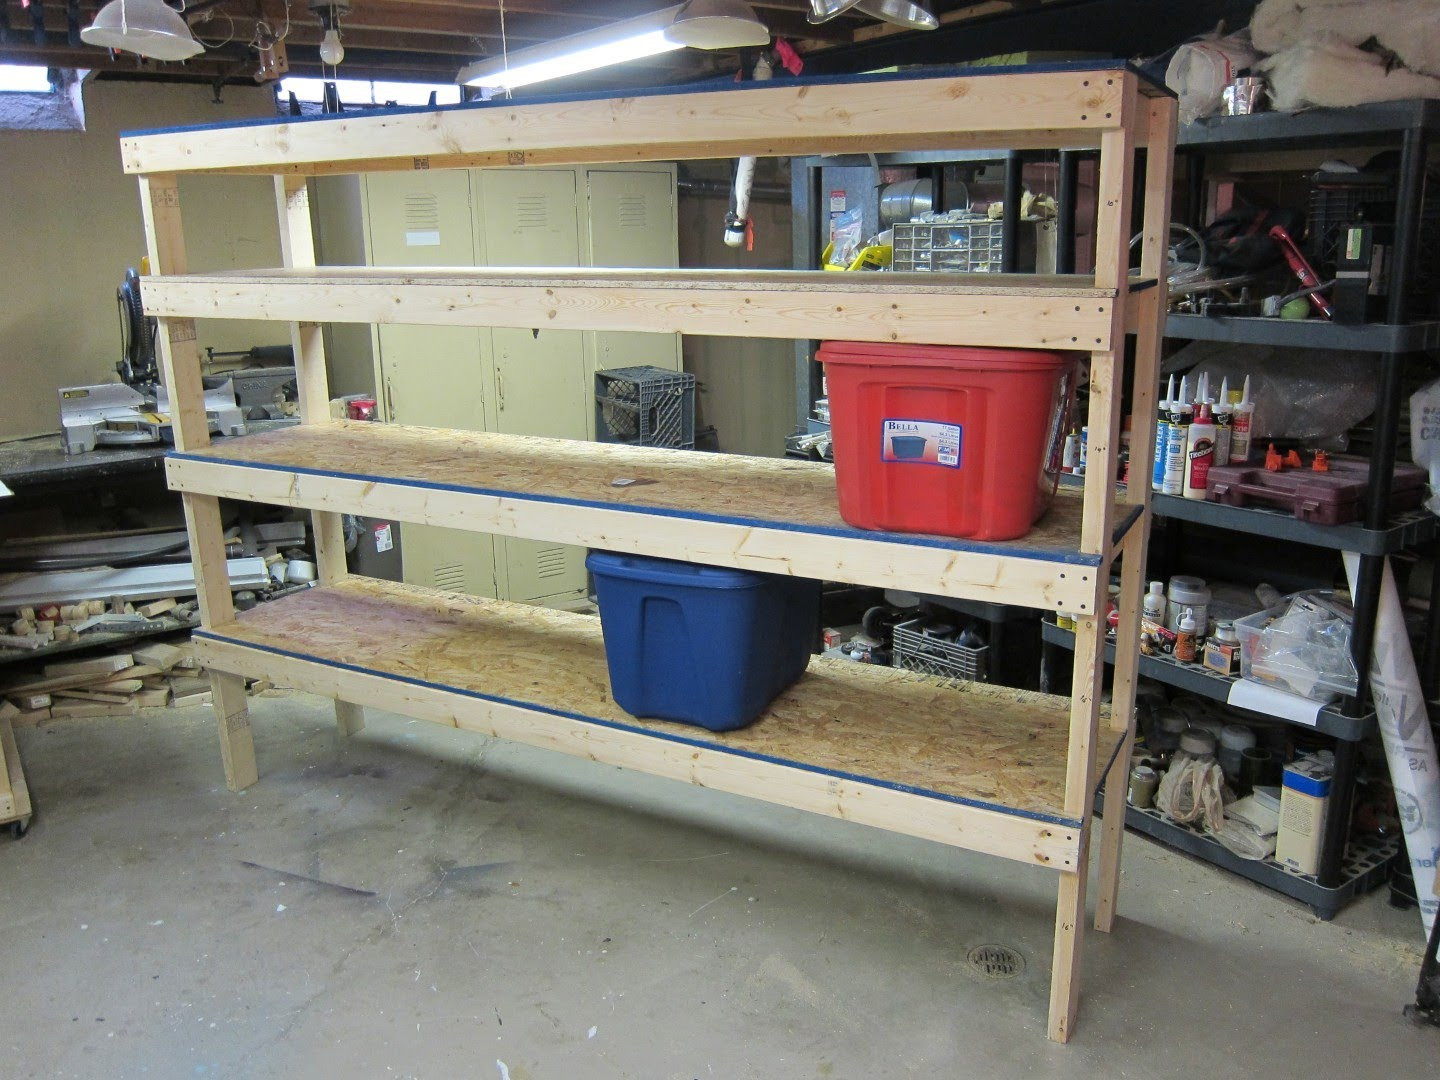 Best ideas about Diy Garage Storage Shelves
. Save or Pin 20 DIY Garage Shelving Ideas Now.